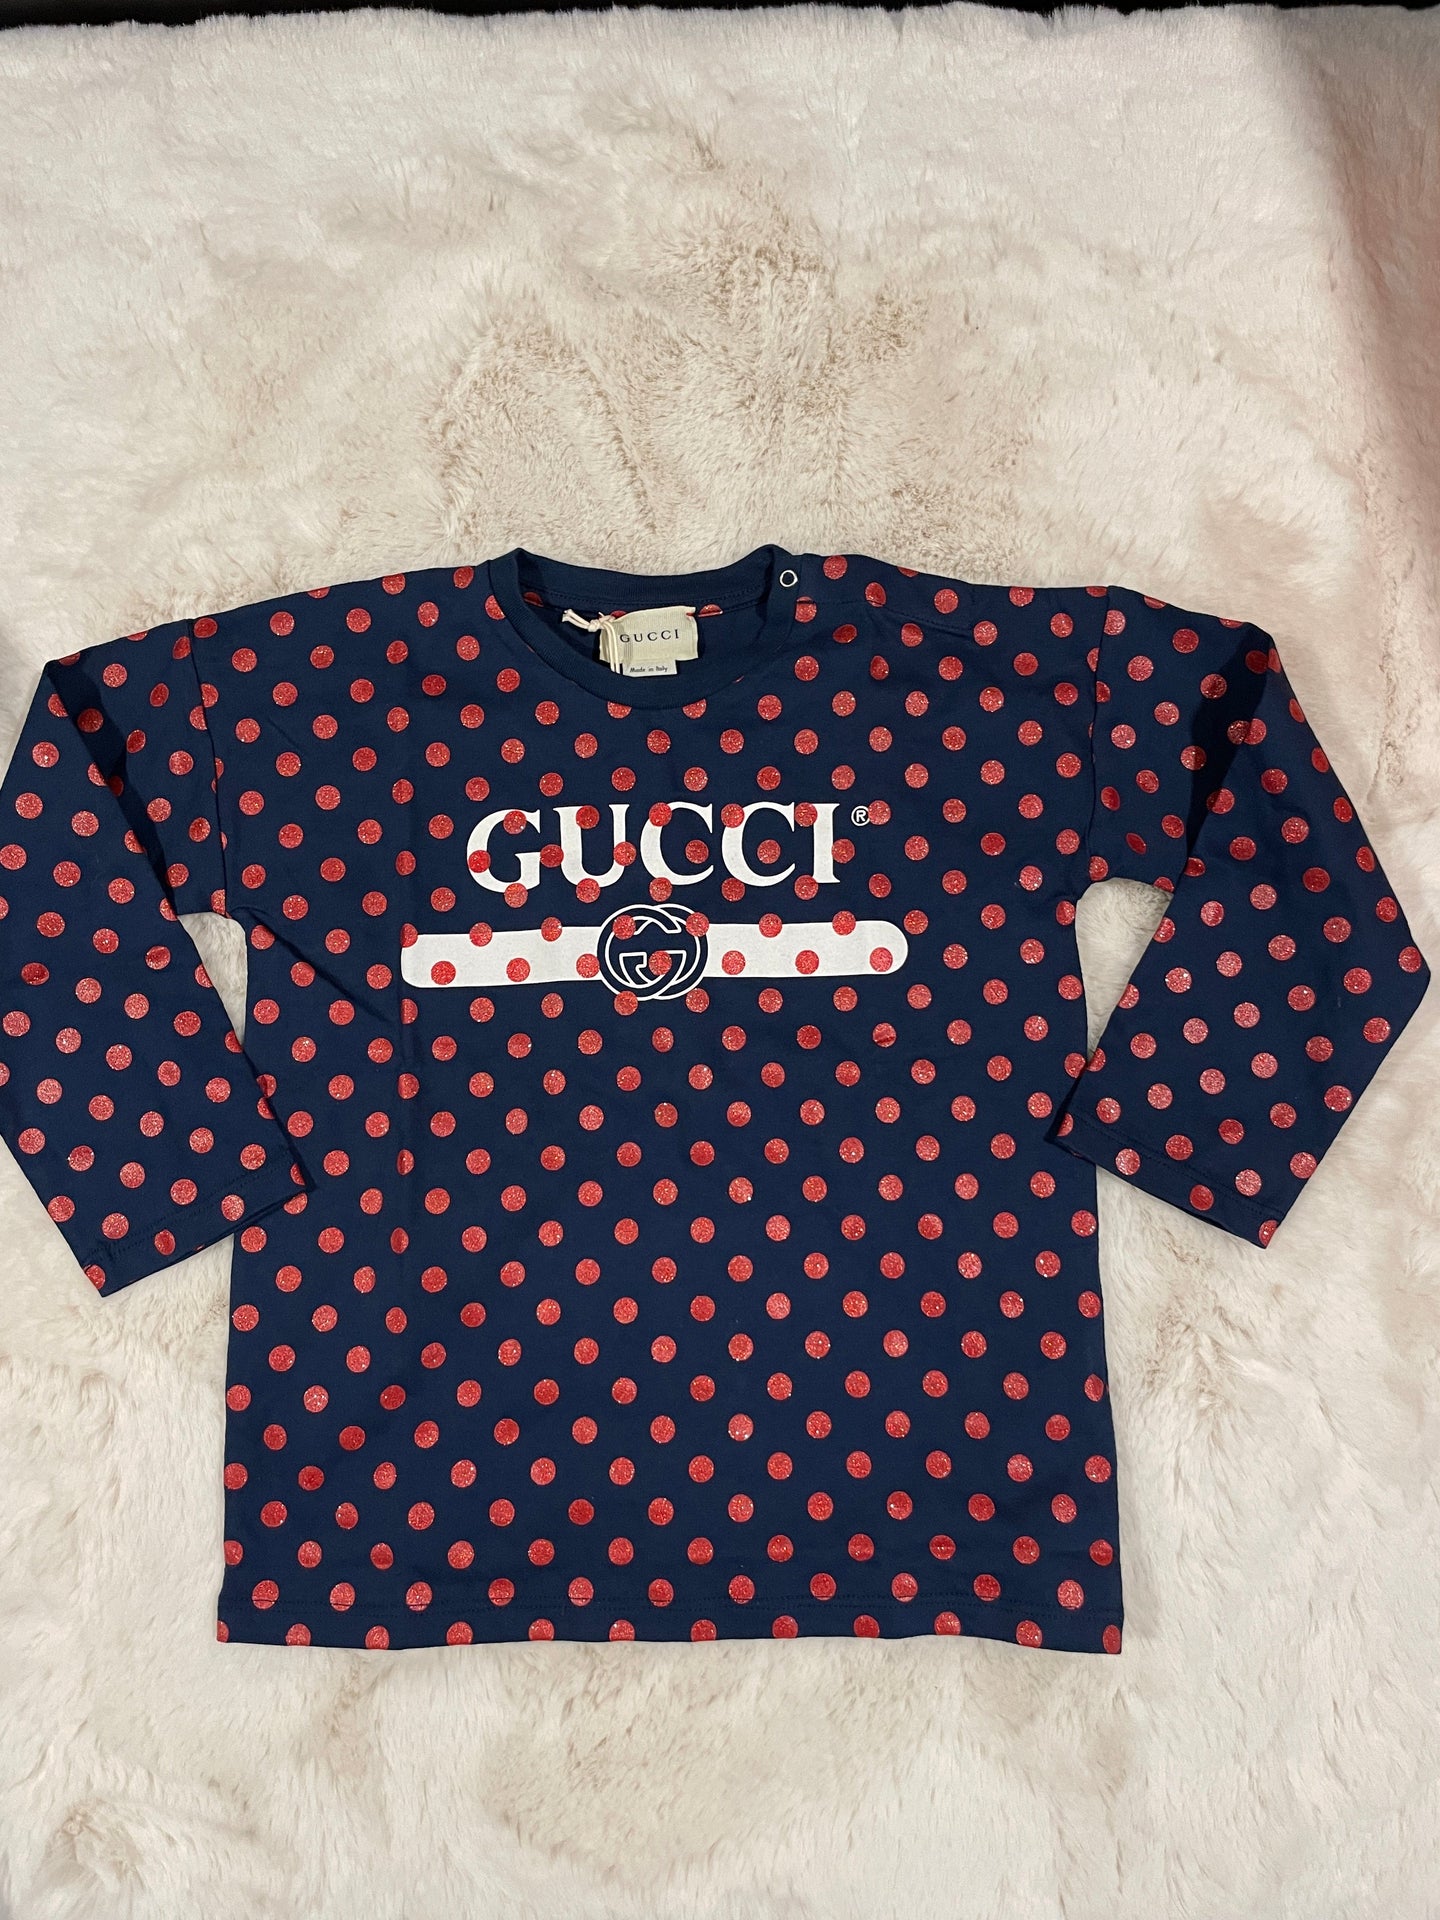 Gucci Navy Blue Long Sleeve Tee Shirt